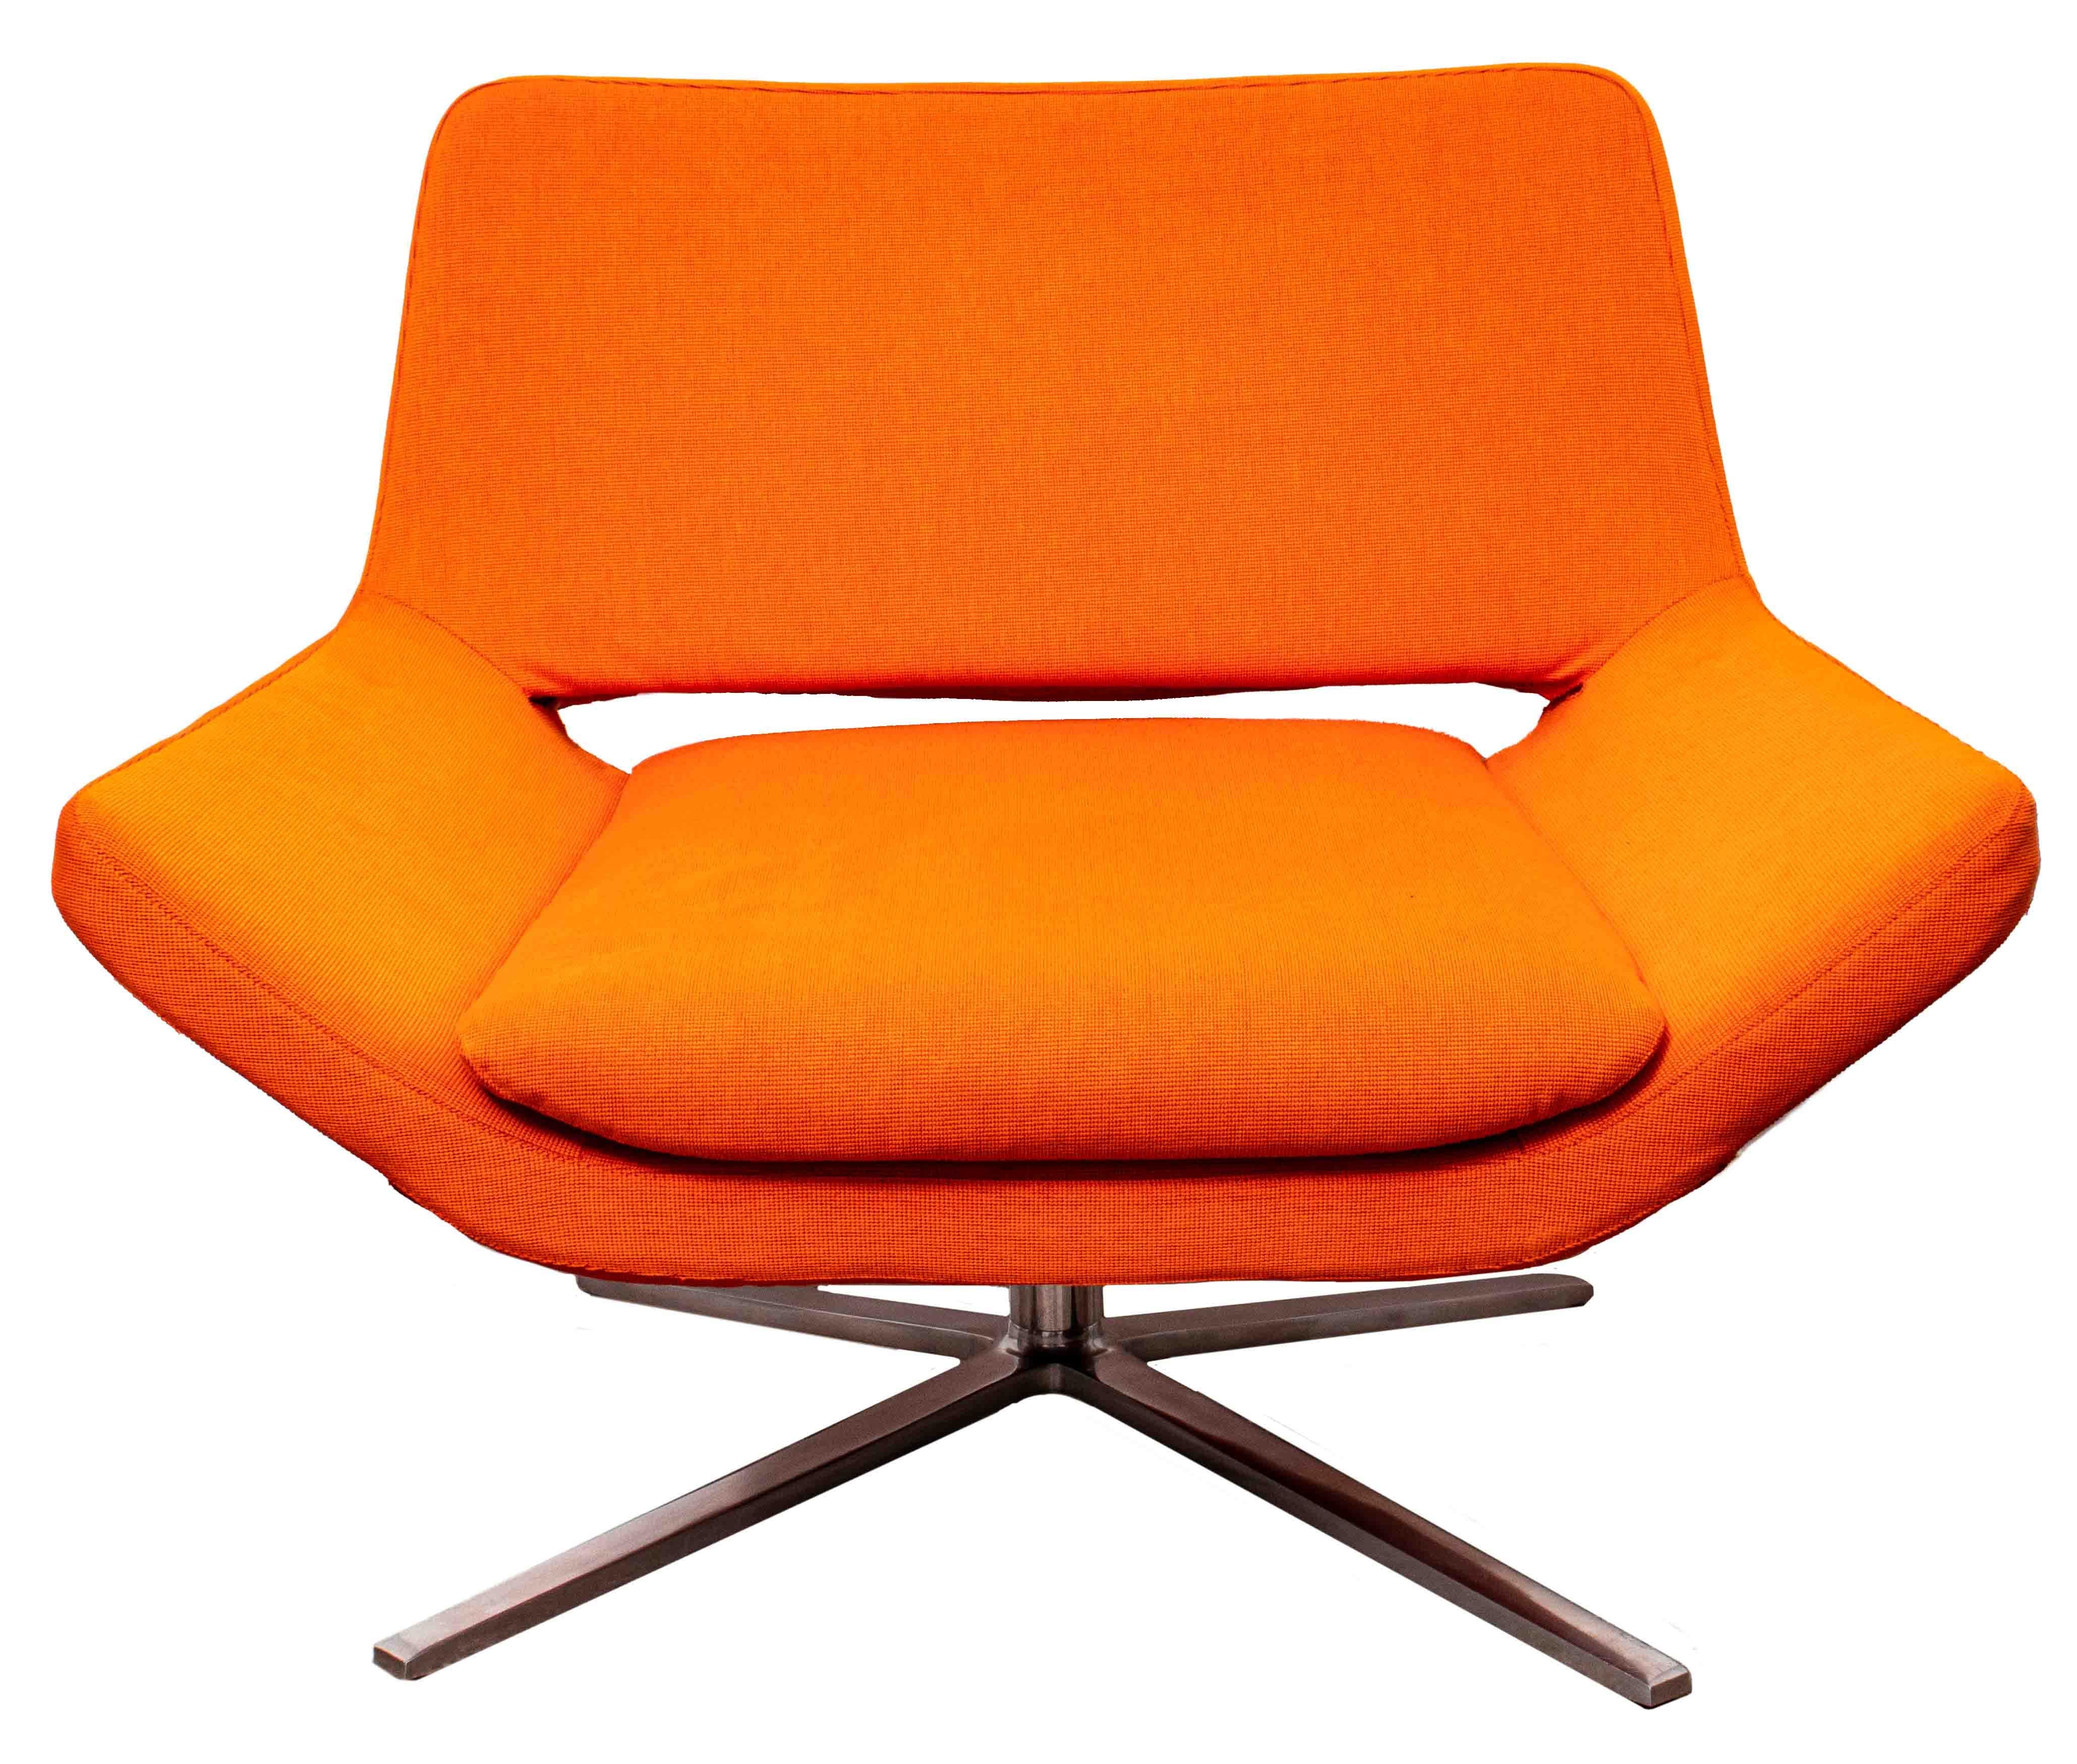 Jeffrey Bernett for B&B Italia Modern Contemporary 'Metropolitan' arm chair in orange upholstery. 
Measures: 28